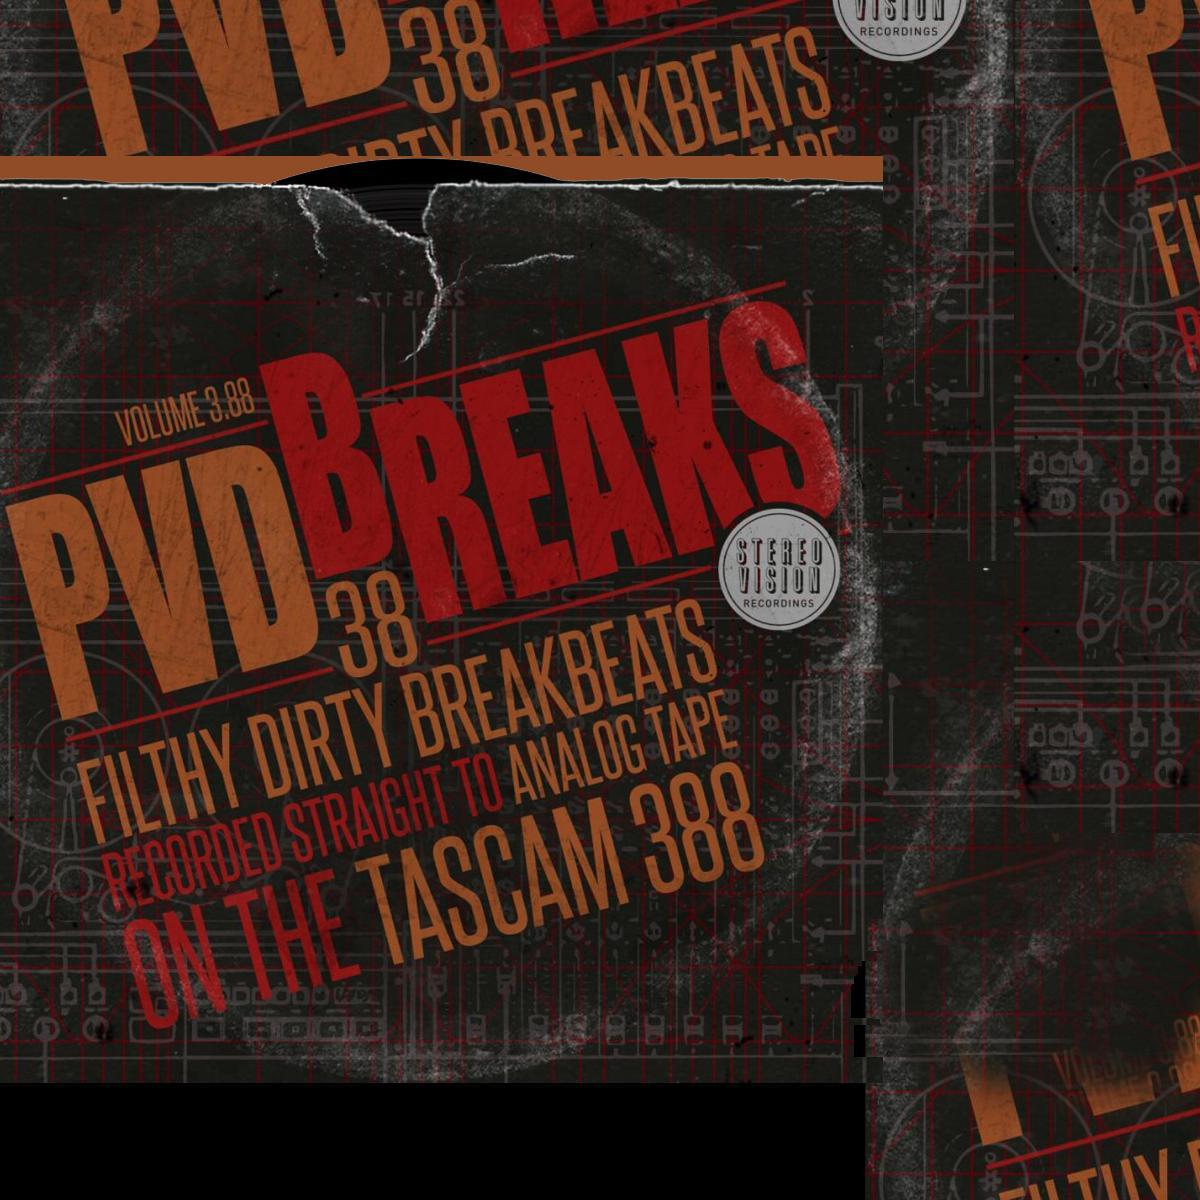 Cover of PVD Breaks Volume 3.88